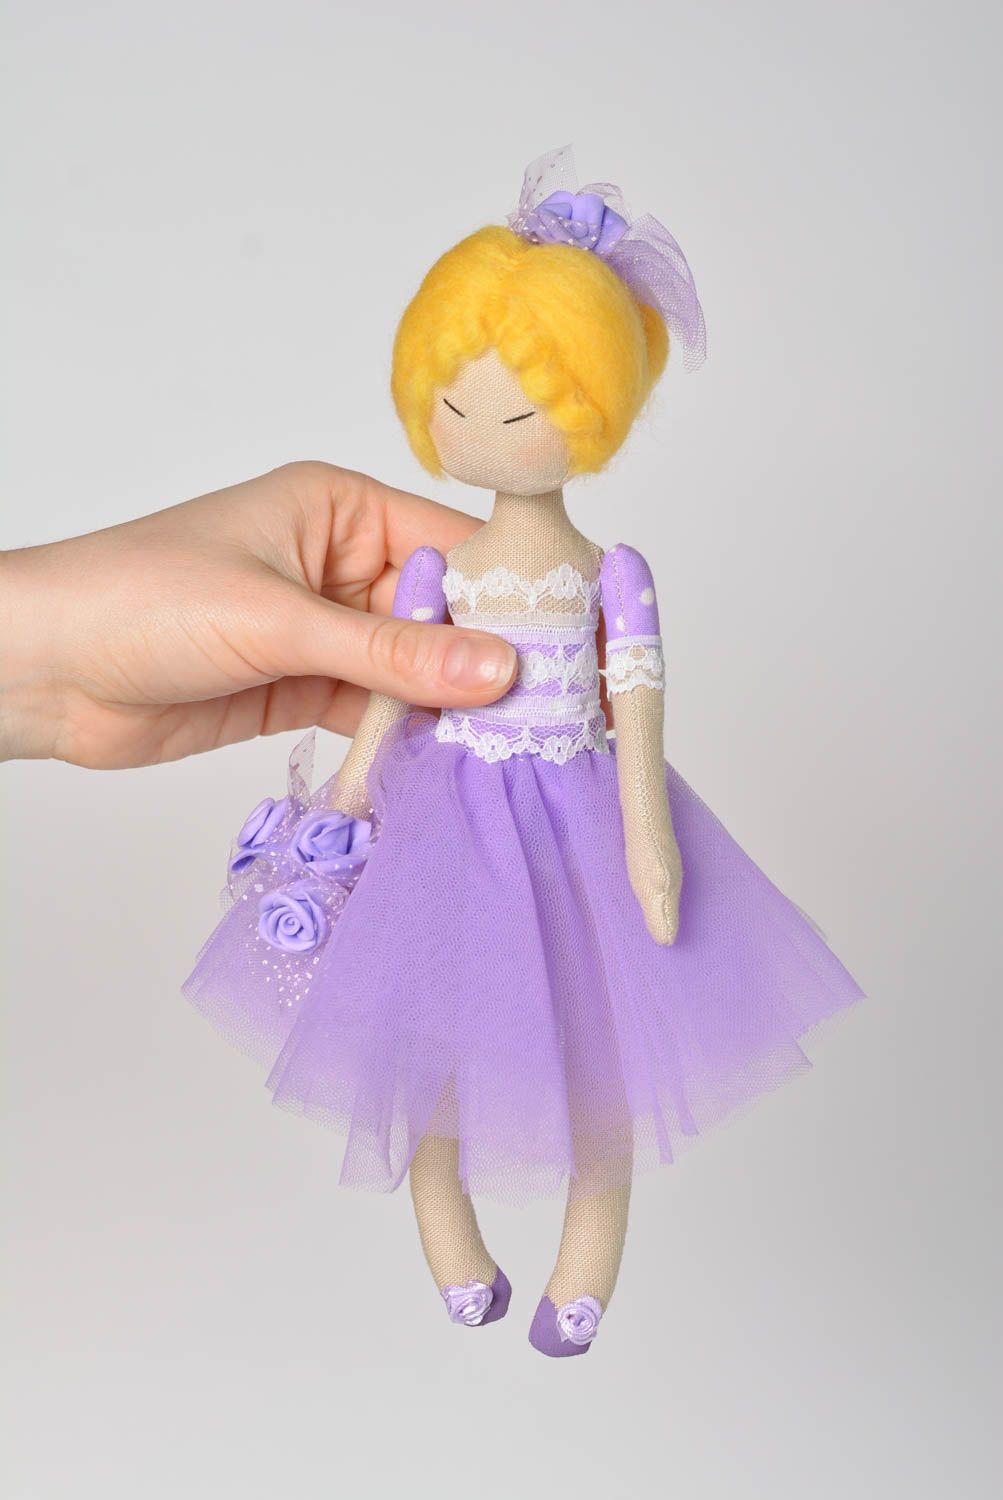 Handmade fabric doll decorative stuffed toy present for baby nursery decor photo 4